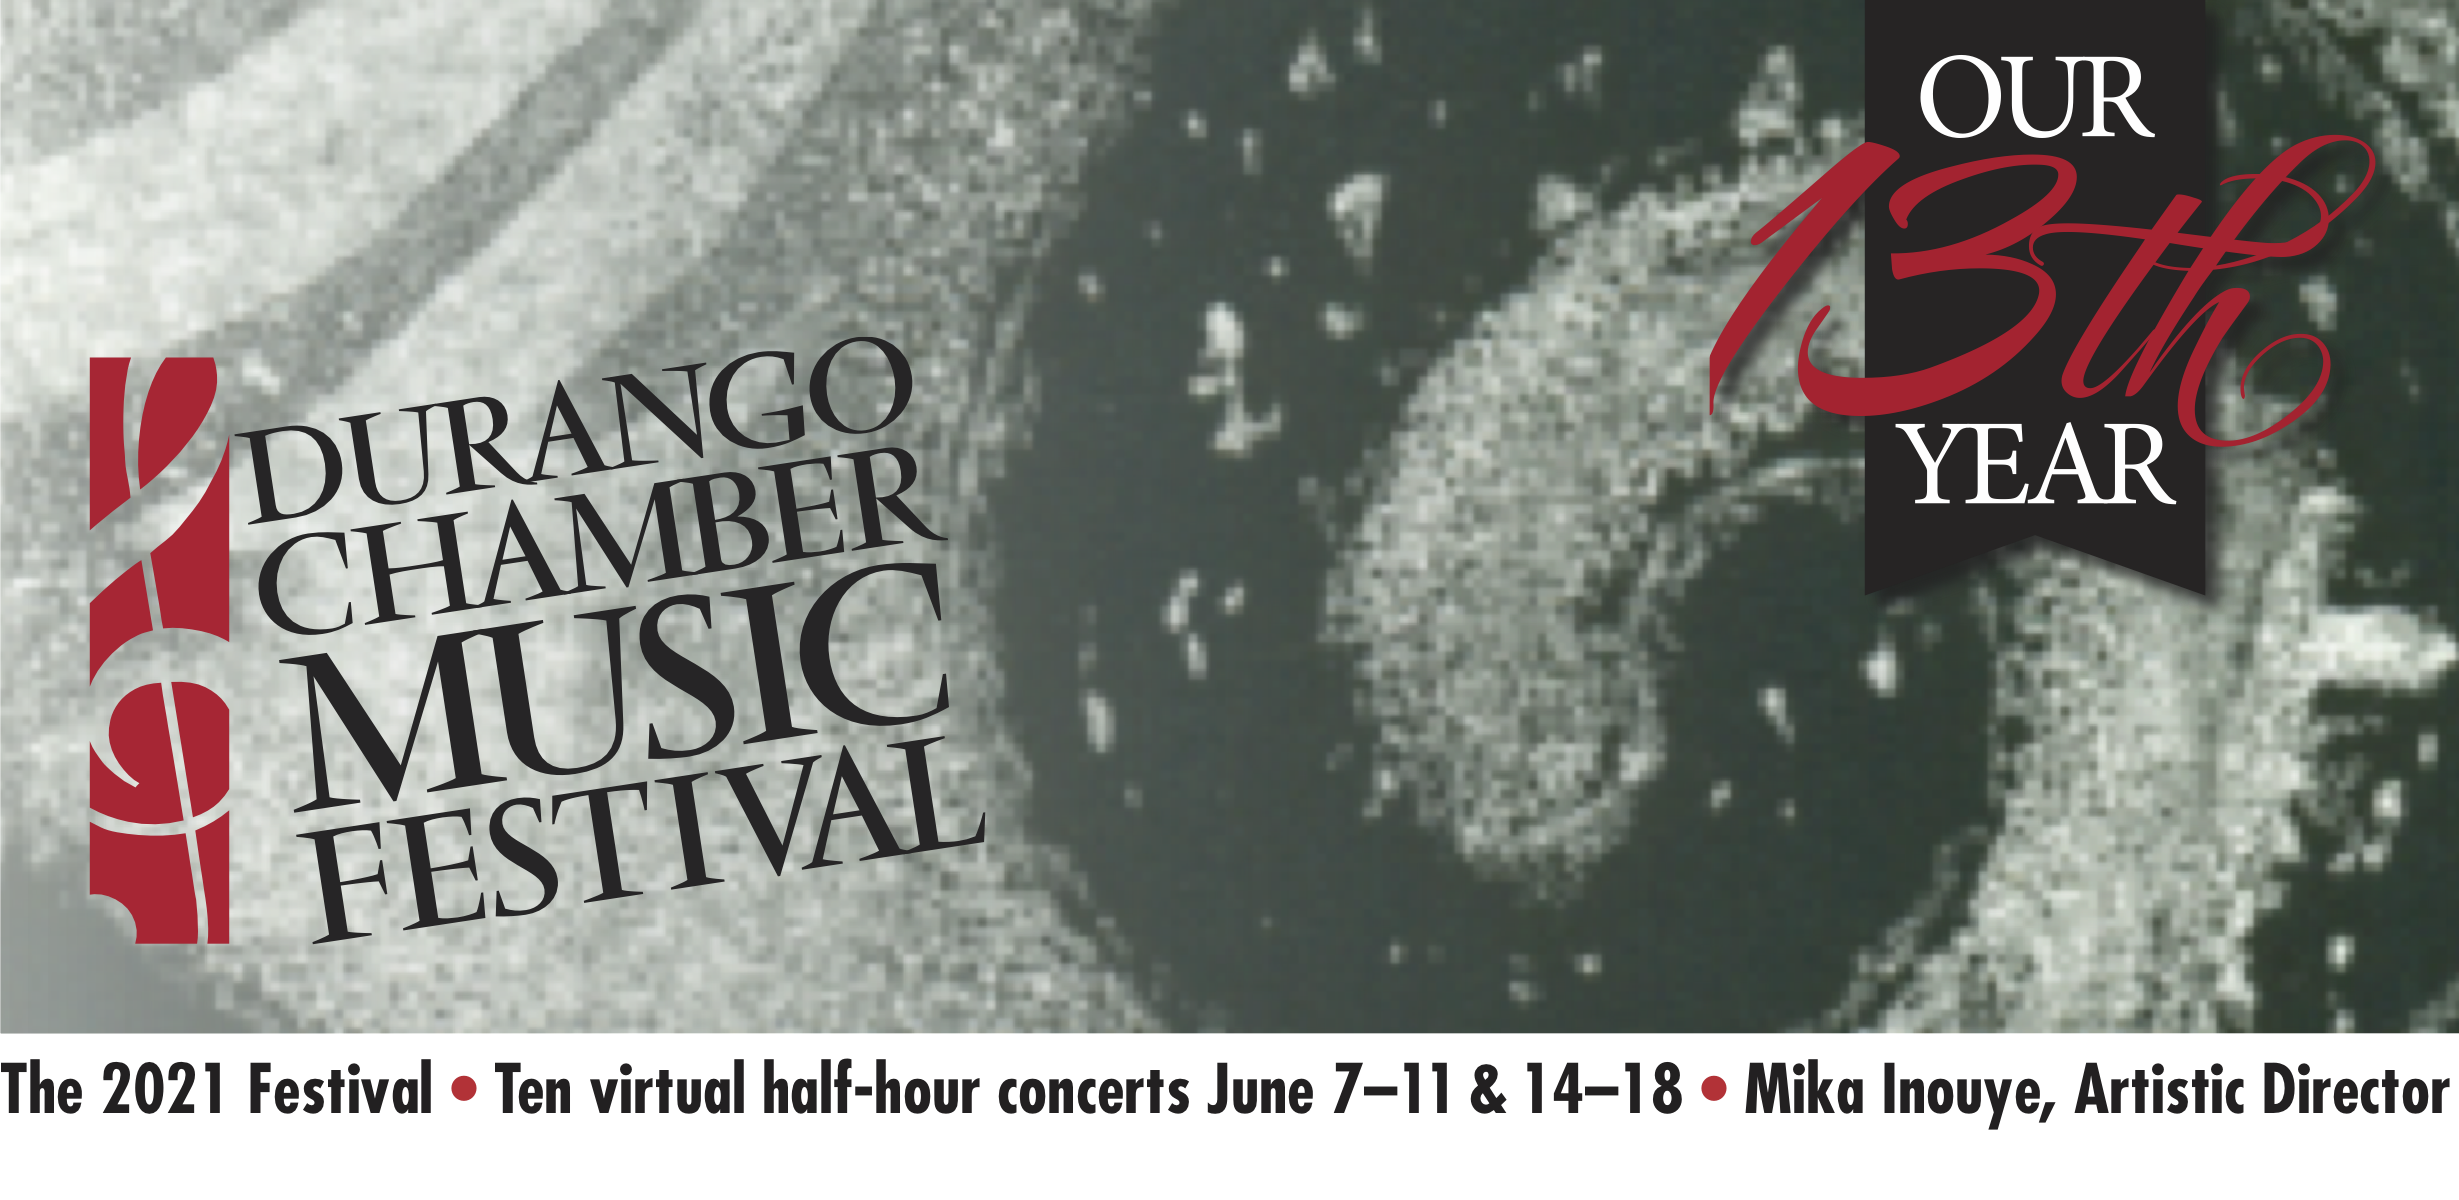 Durango Chamber Music Festival :: Ten half-hour concerts June 7-11 & 14-18, 2021